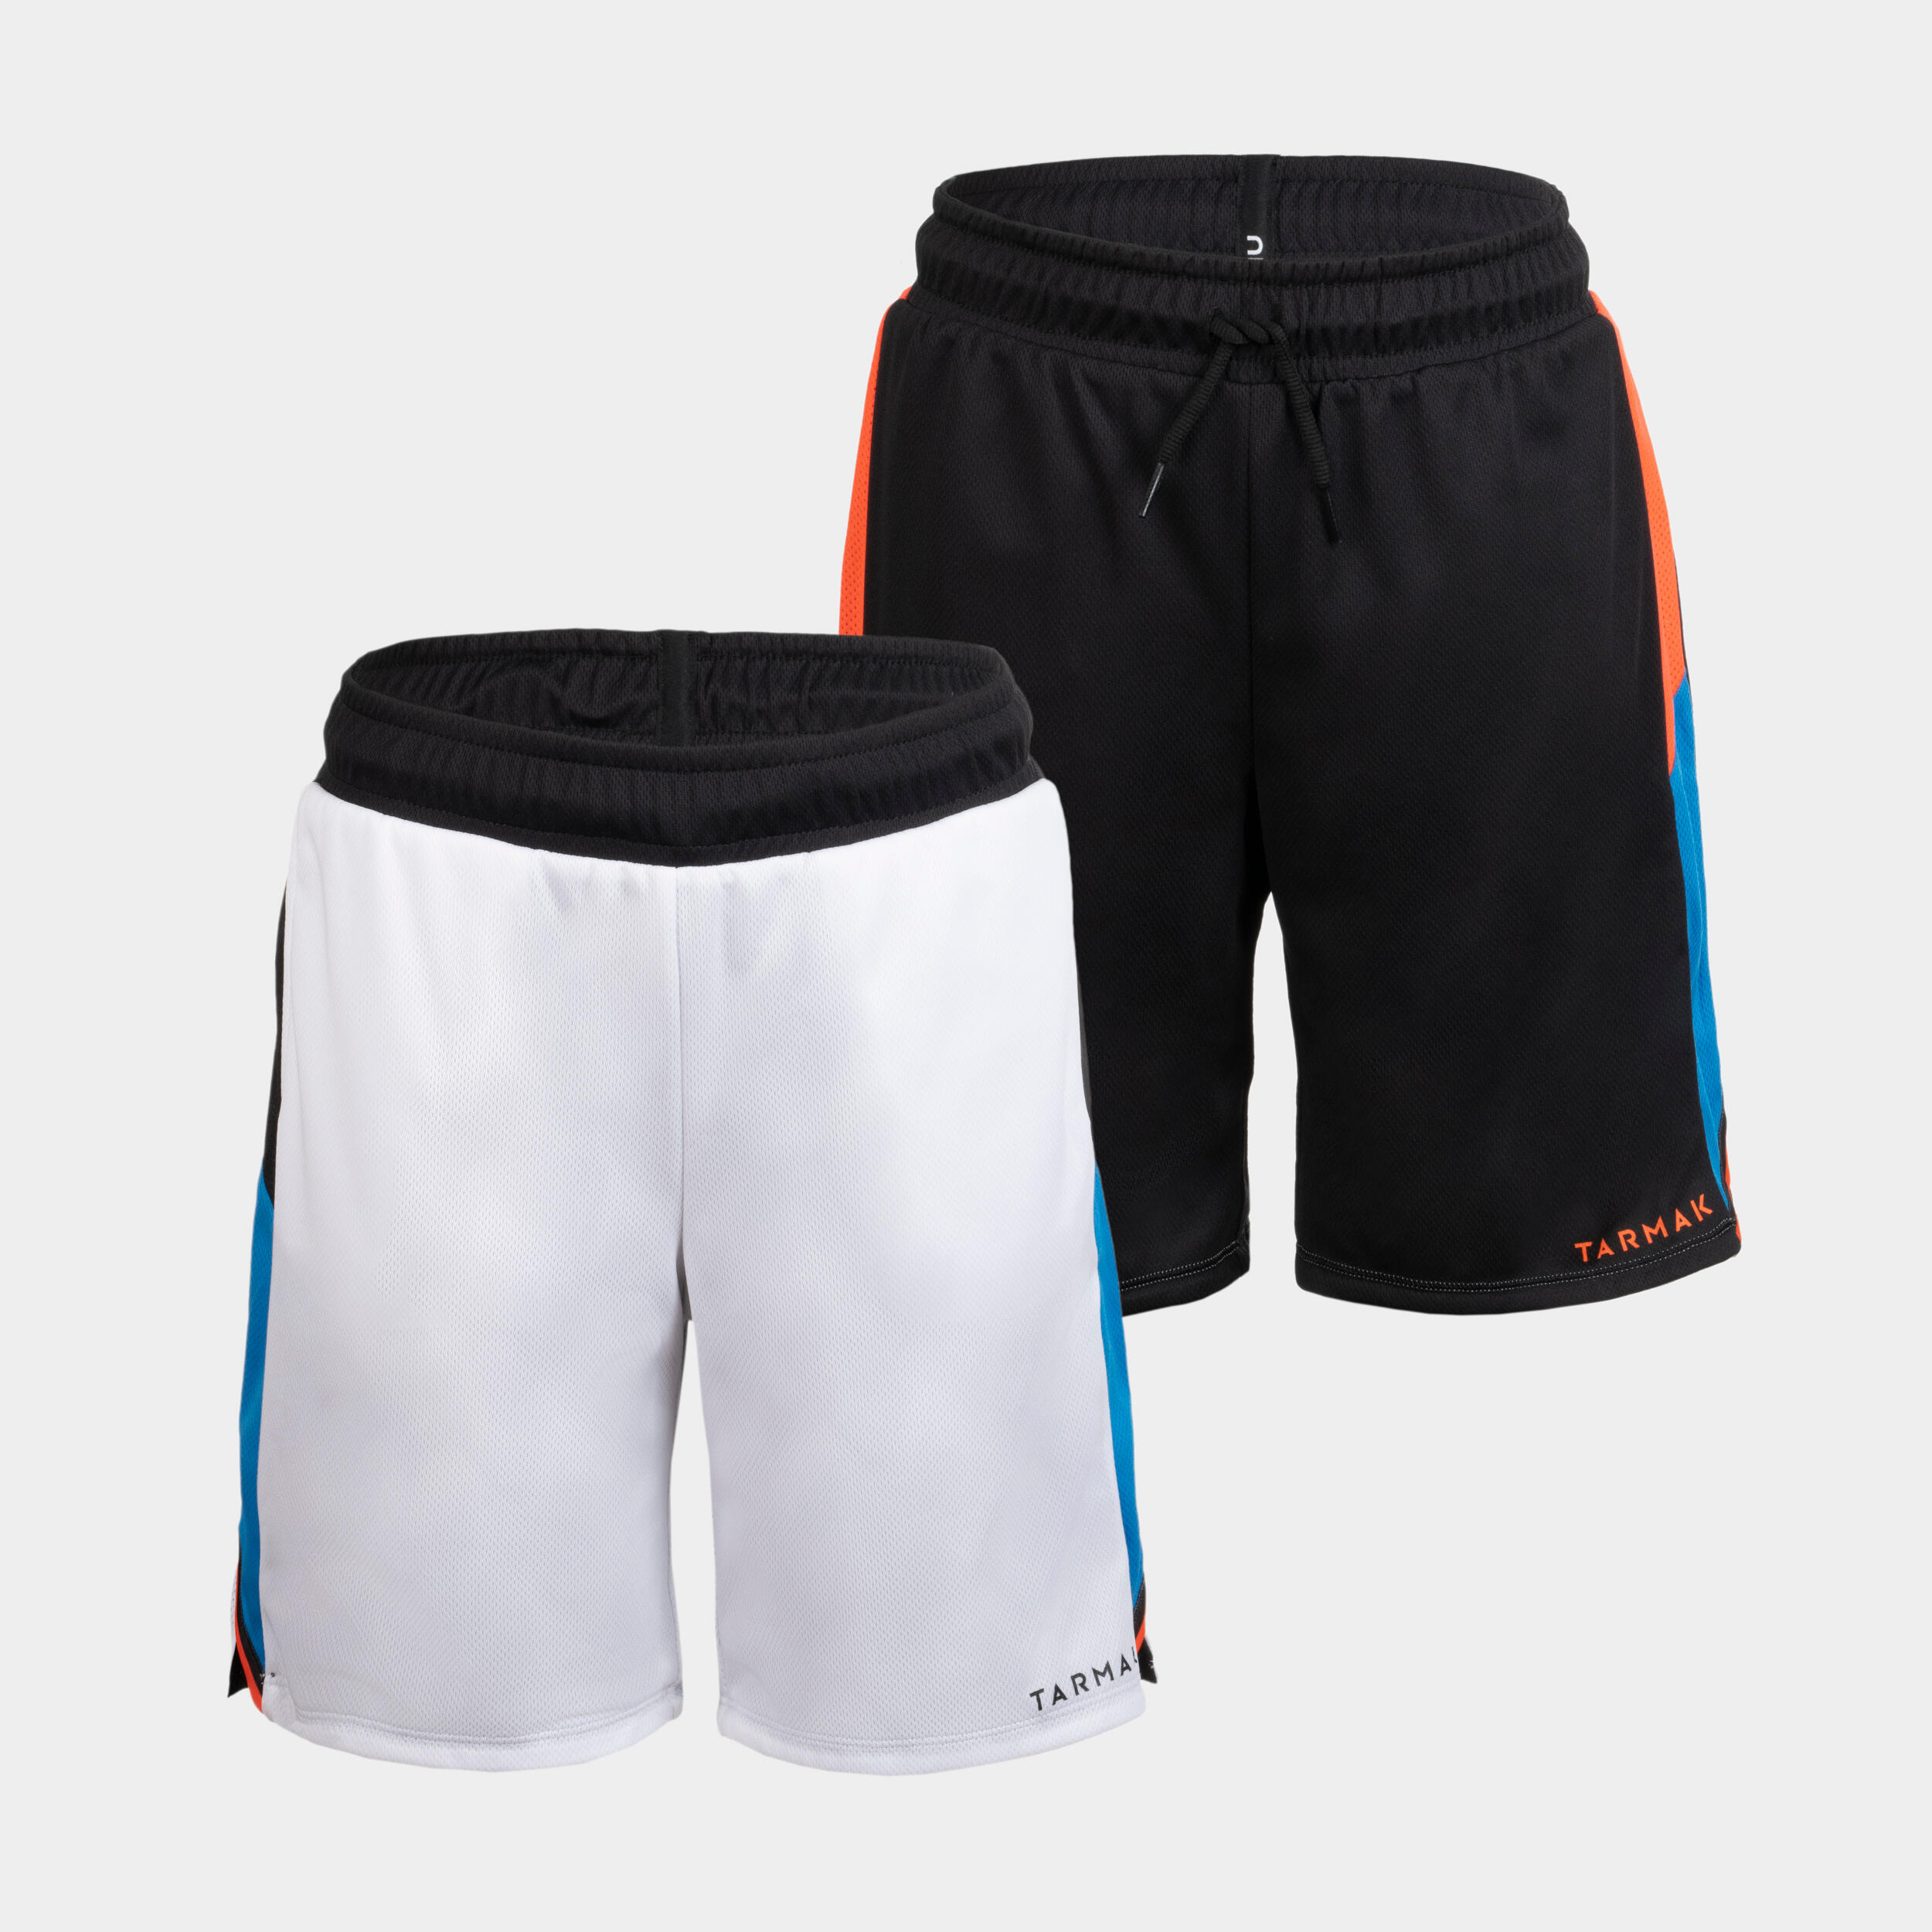 TARMAK Kids' Reversible Basketball Shorts SH500R - White/Black/Orange